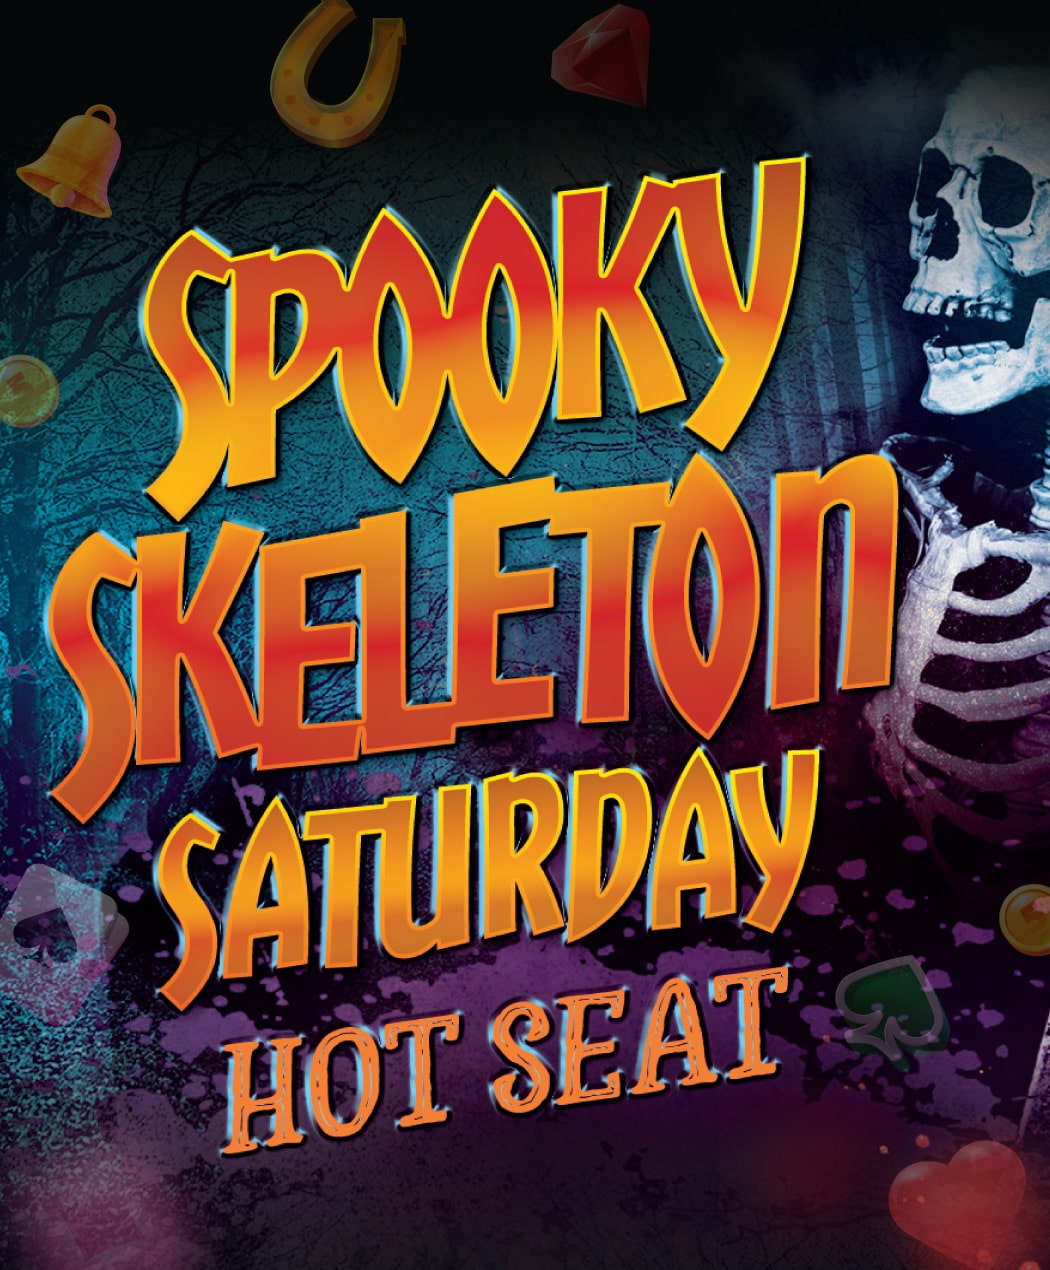 Spooky Skeleton Saturday Hot Seat